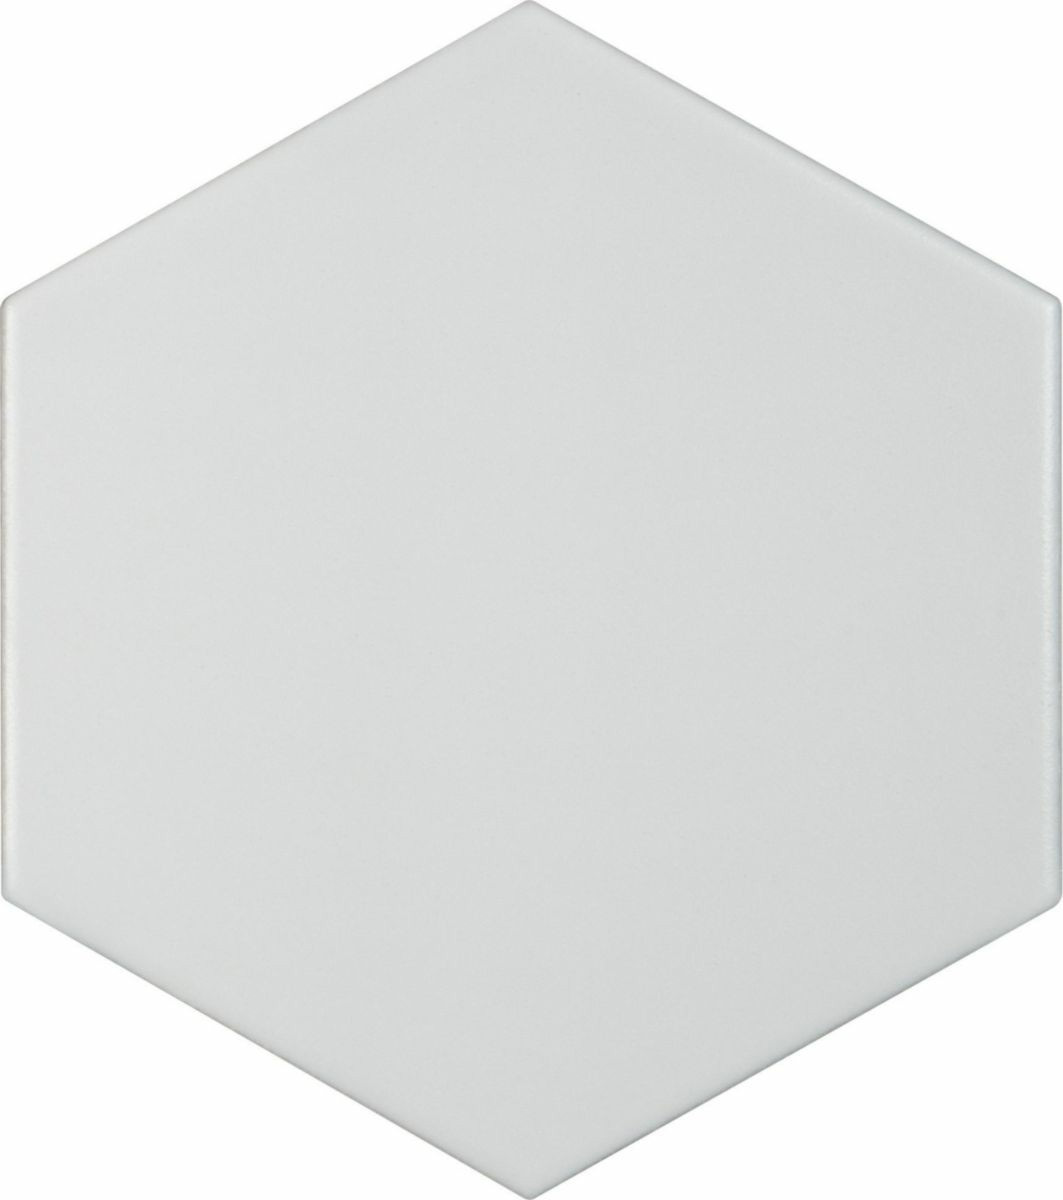 Grès cérame Bati Orient blanc mat hexagone 14 x 16,3 cm CEBL23